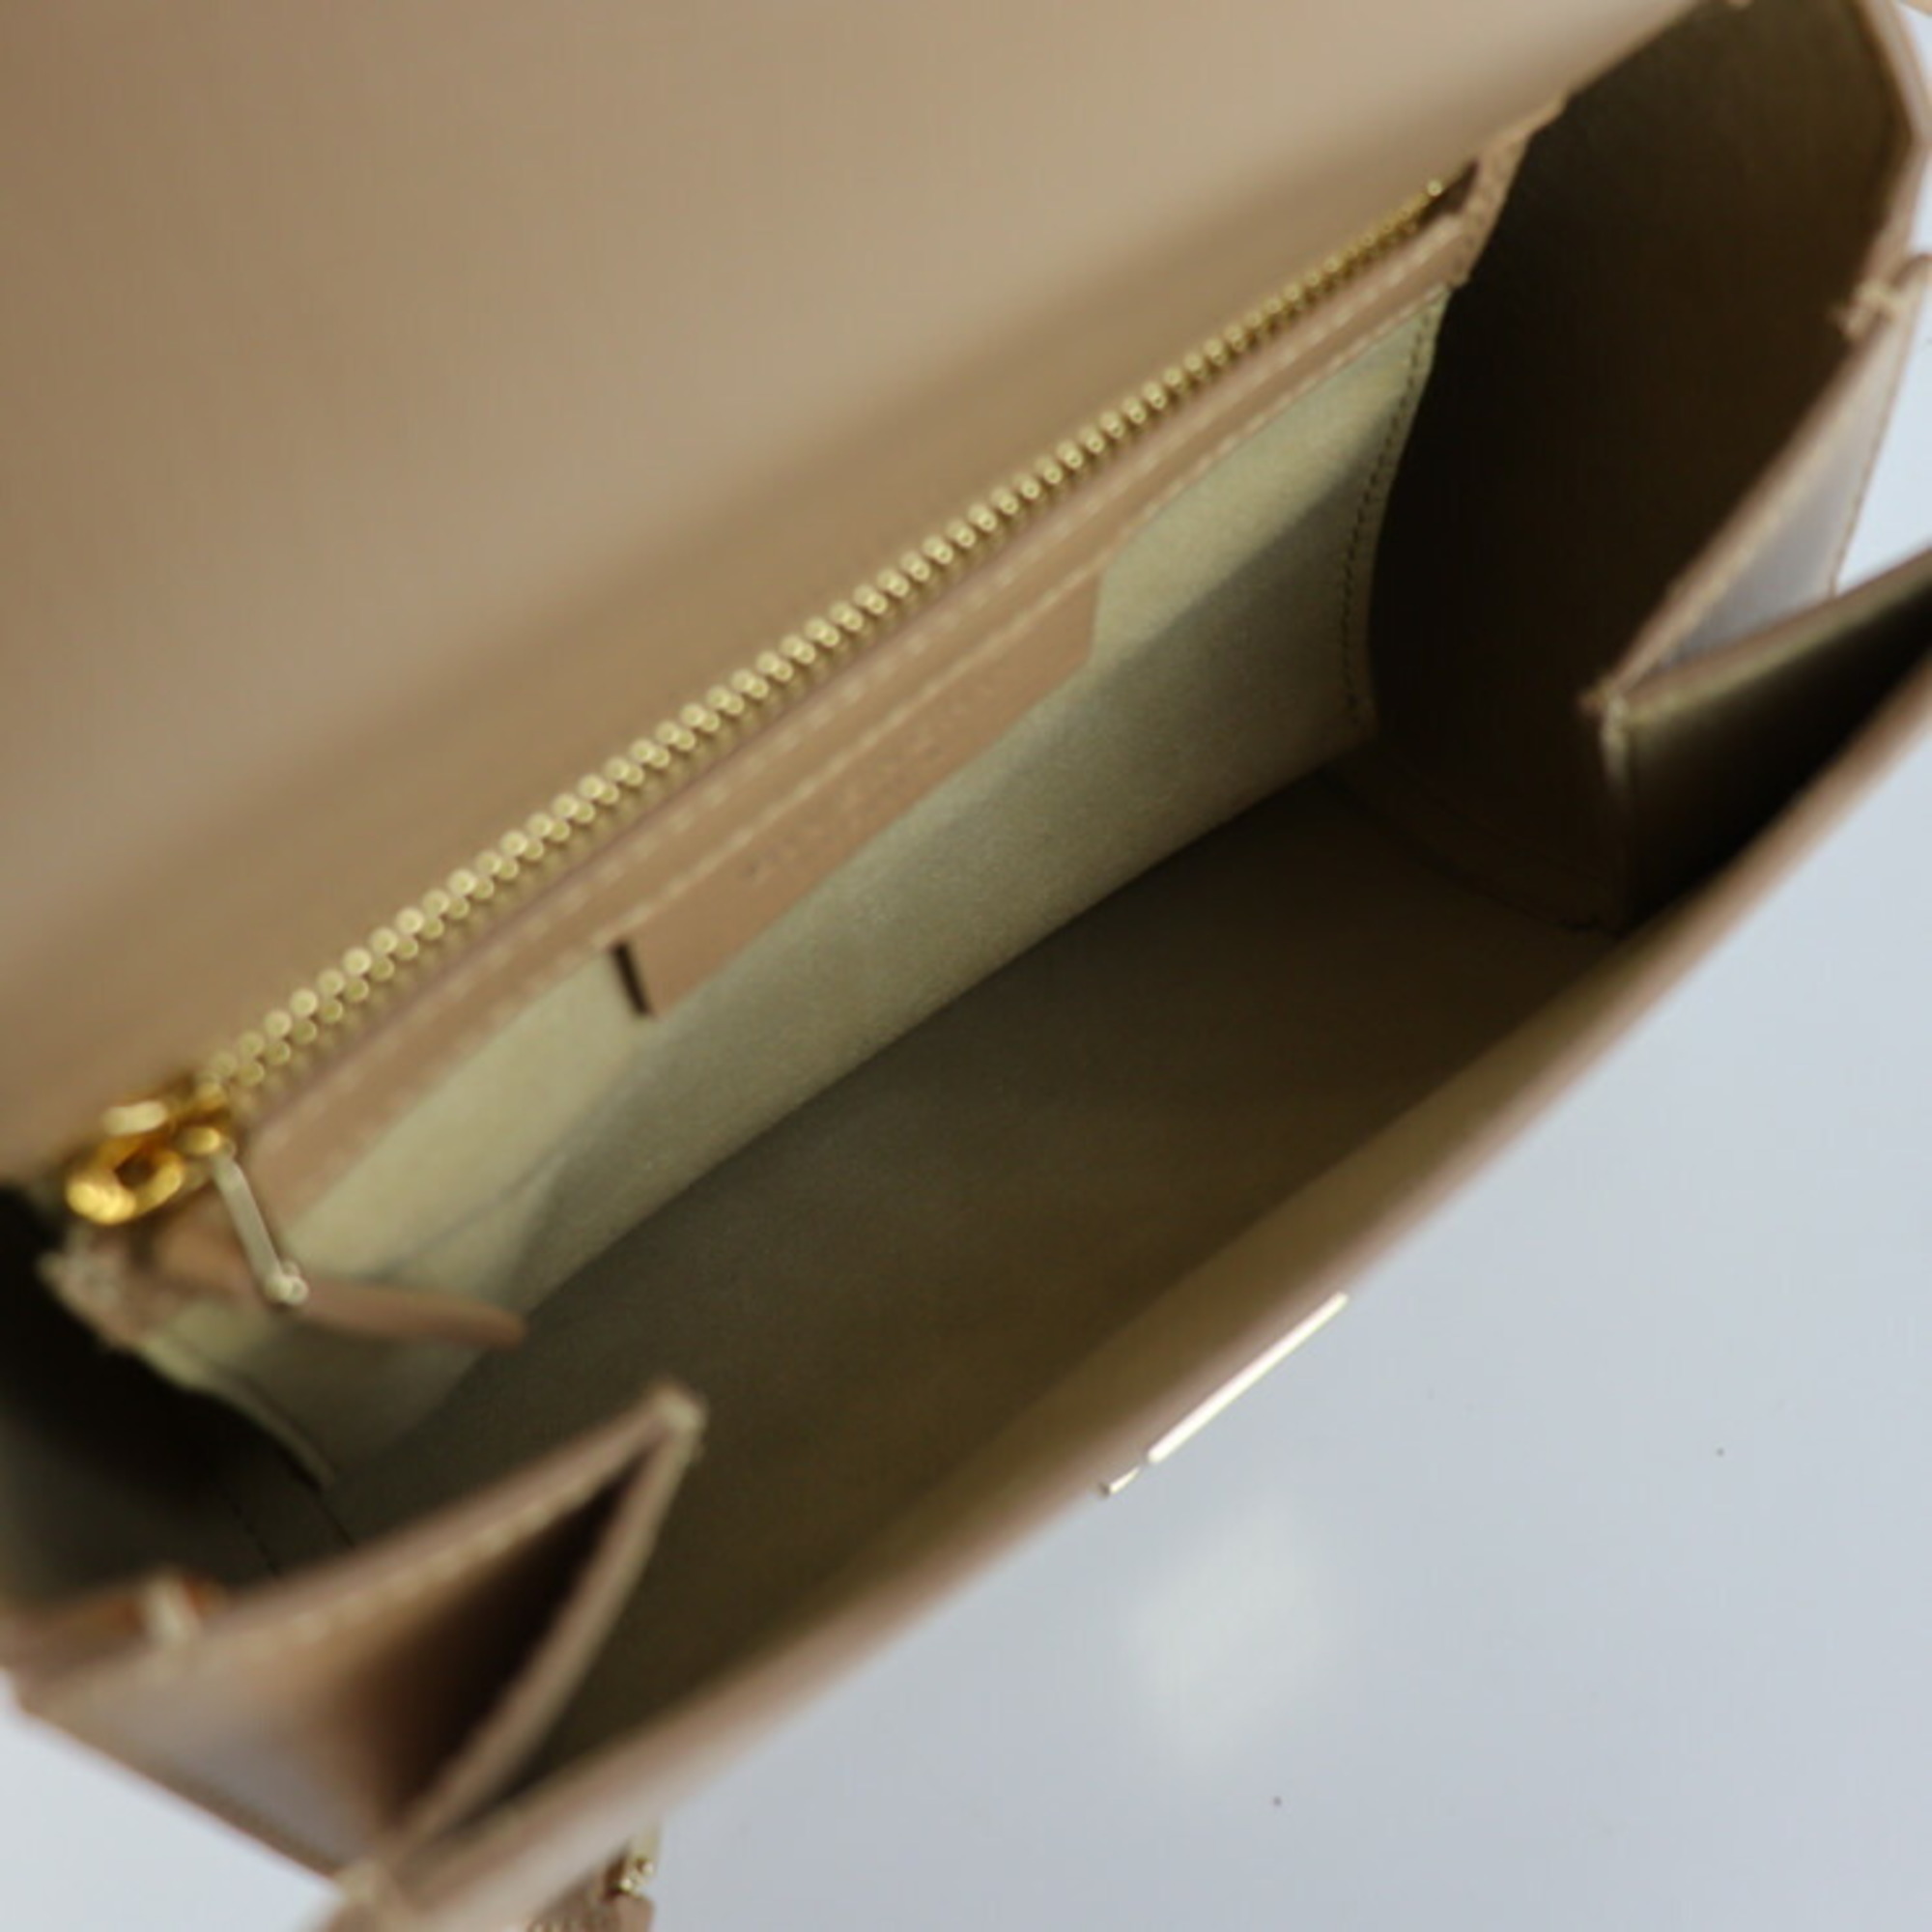 GIVENCHY Givenchy Pandora Box Mini Shoulder Bag Leather Beige Gold Metal Fittings Diagonal Crossbody